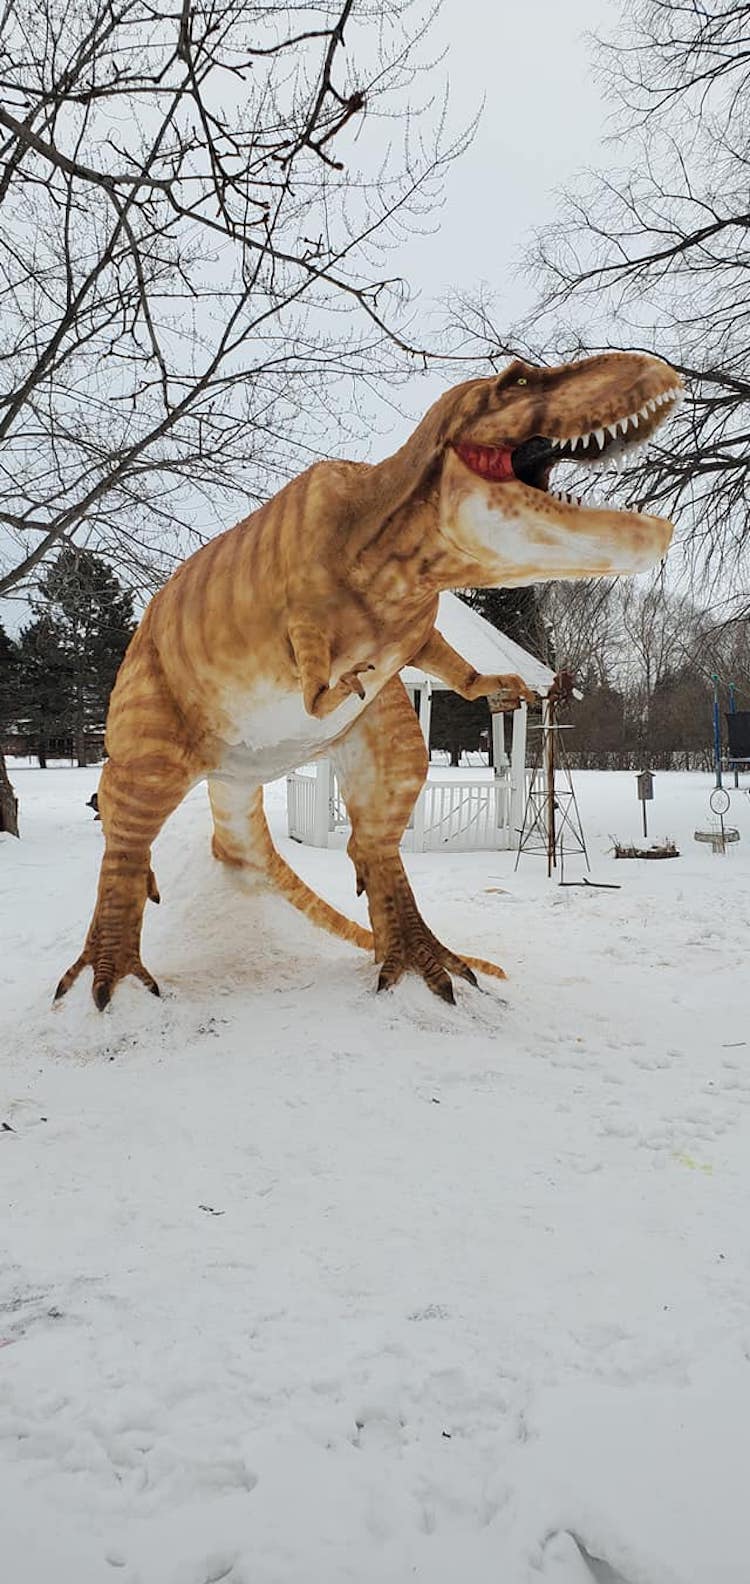 T-Rex Snow Sculpture by Paul Larcom